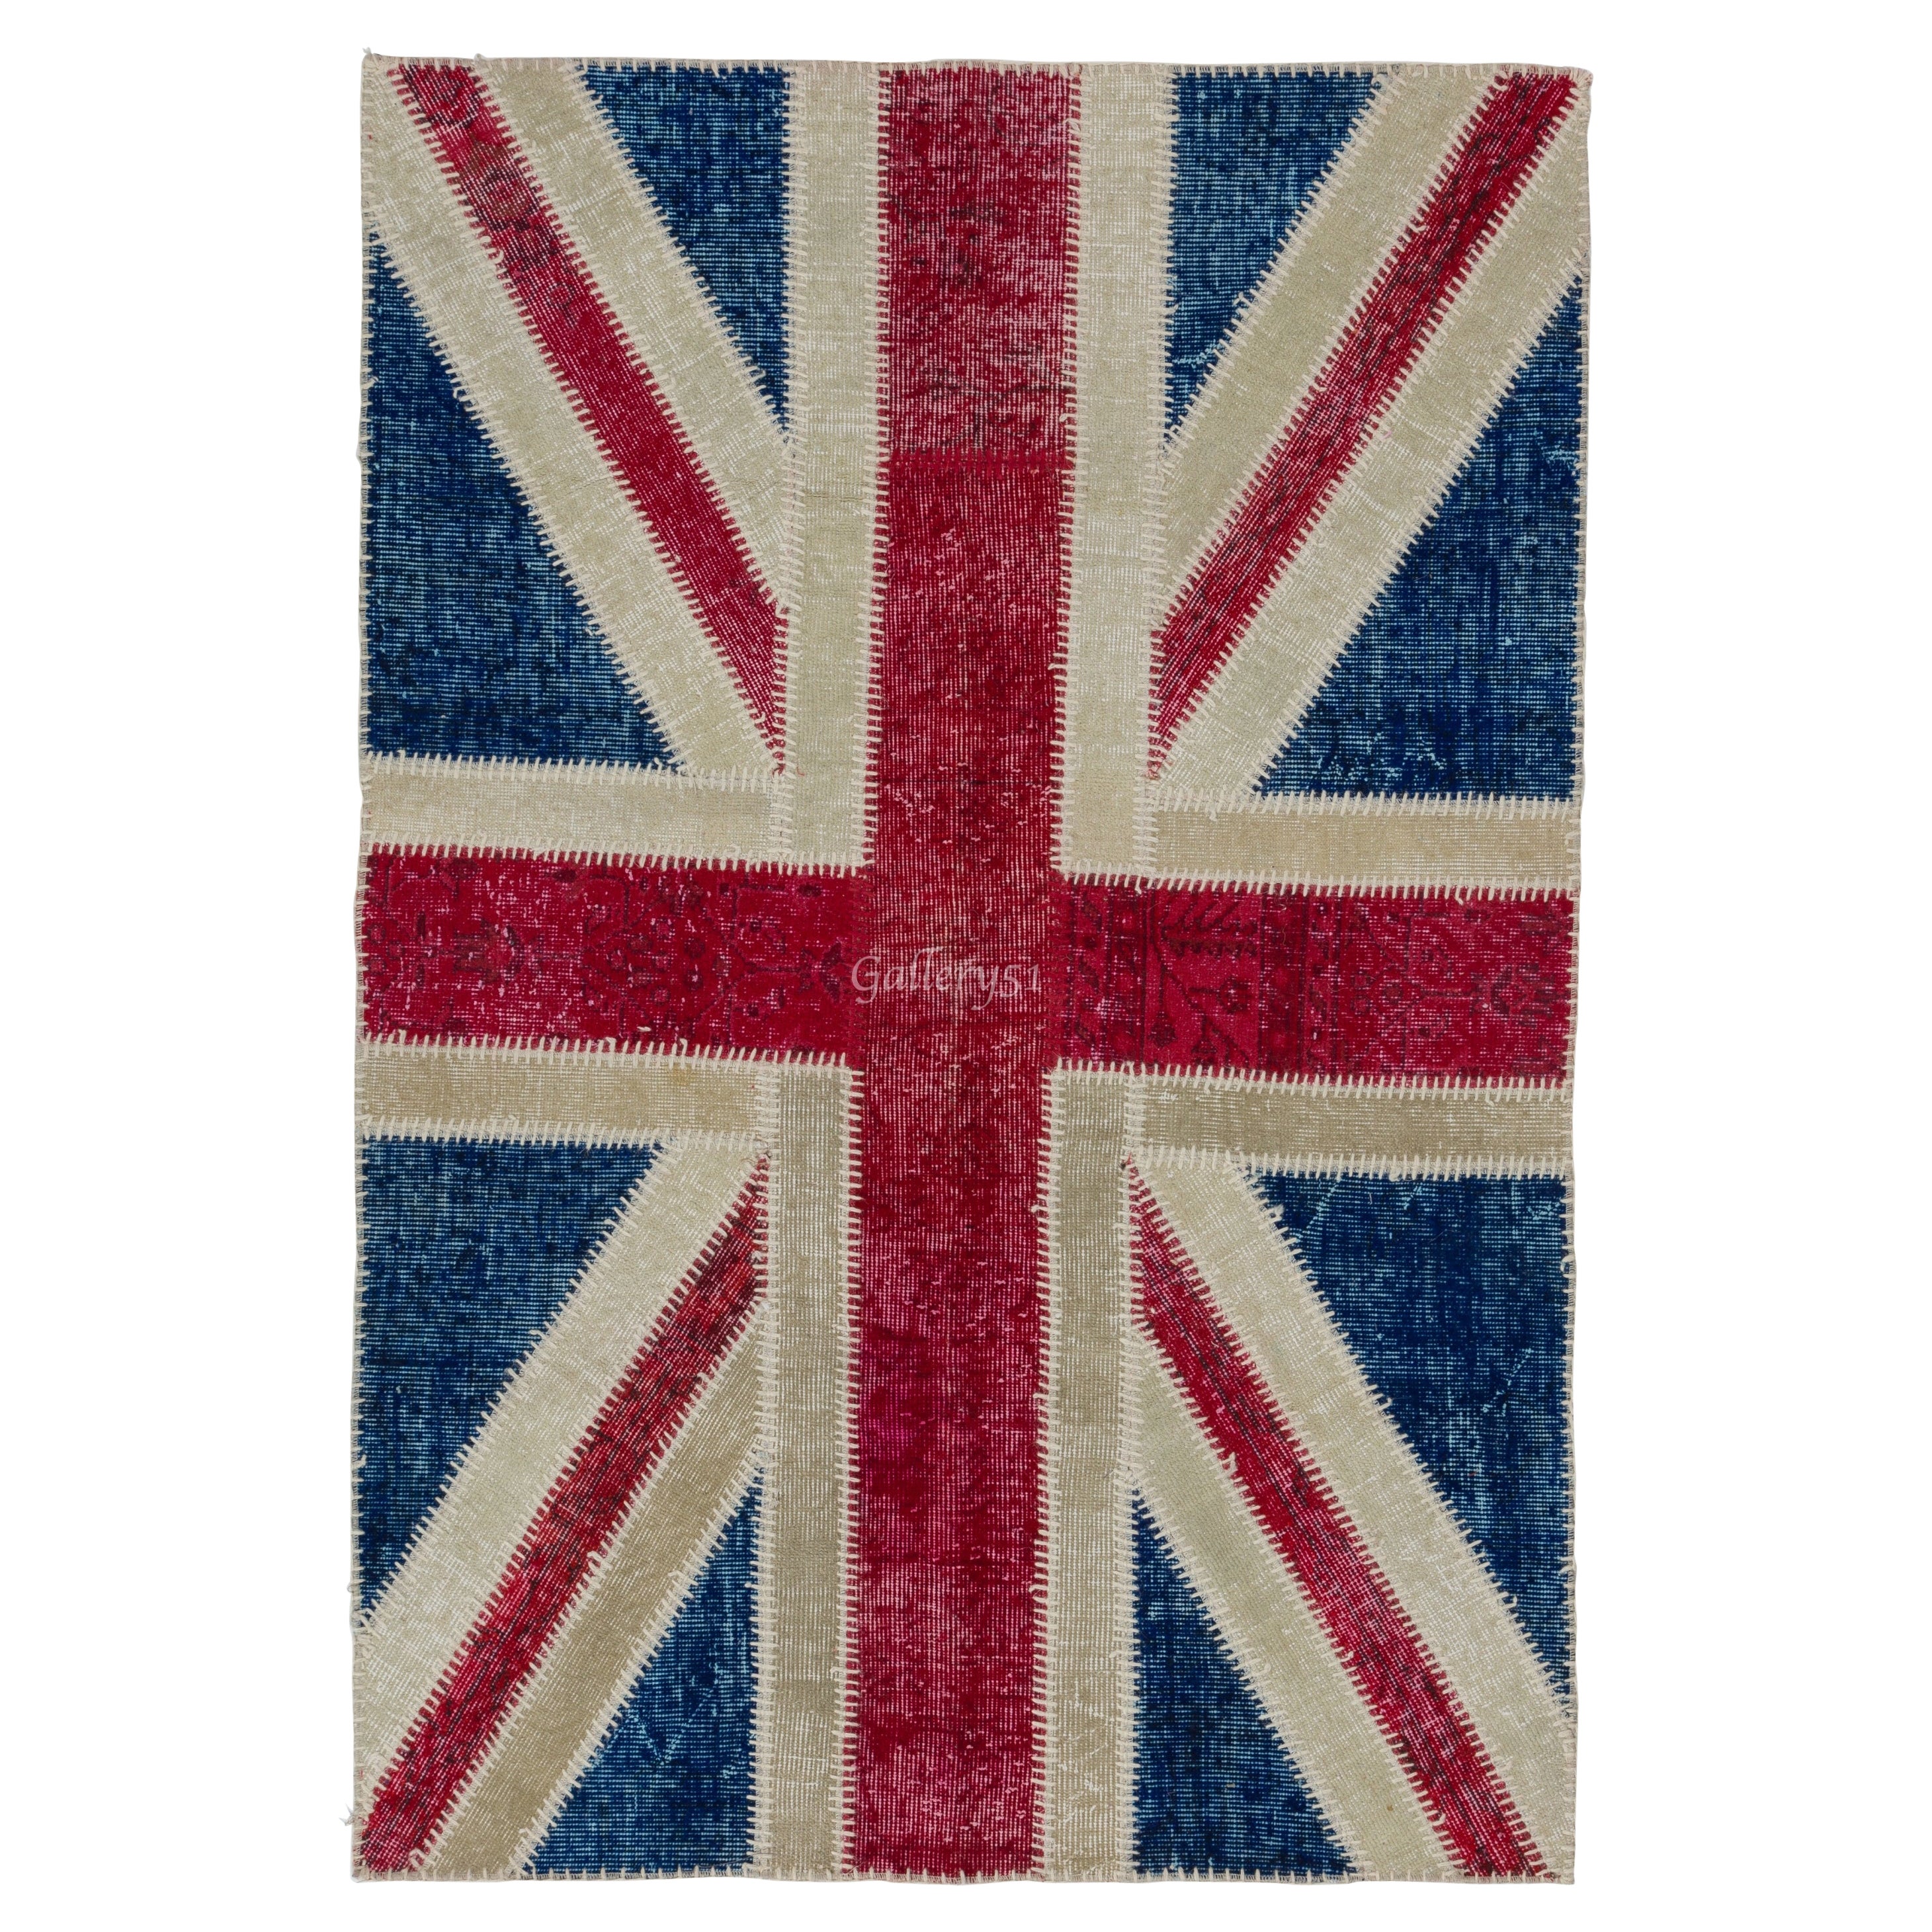 Union Jack British Flag Design Patchwork Rug. Custom Colors and Sizes